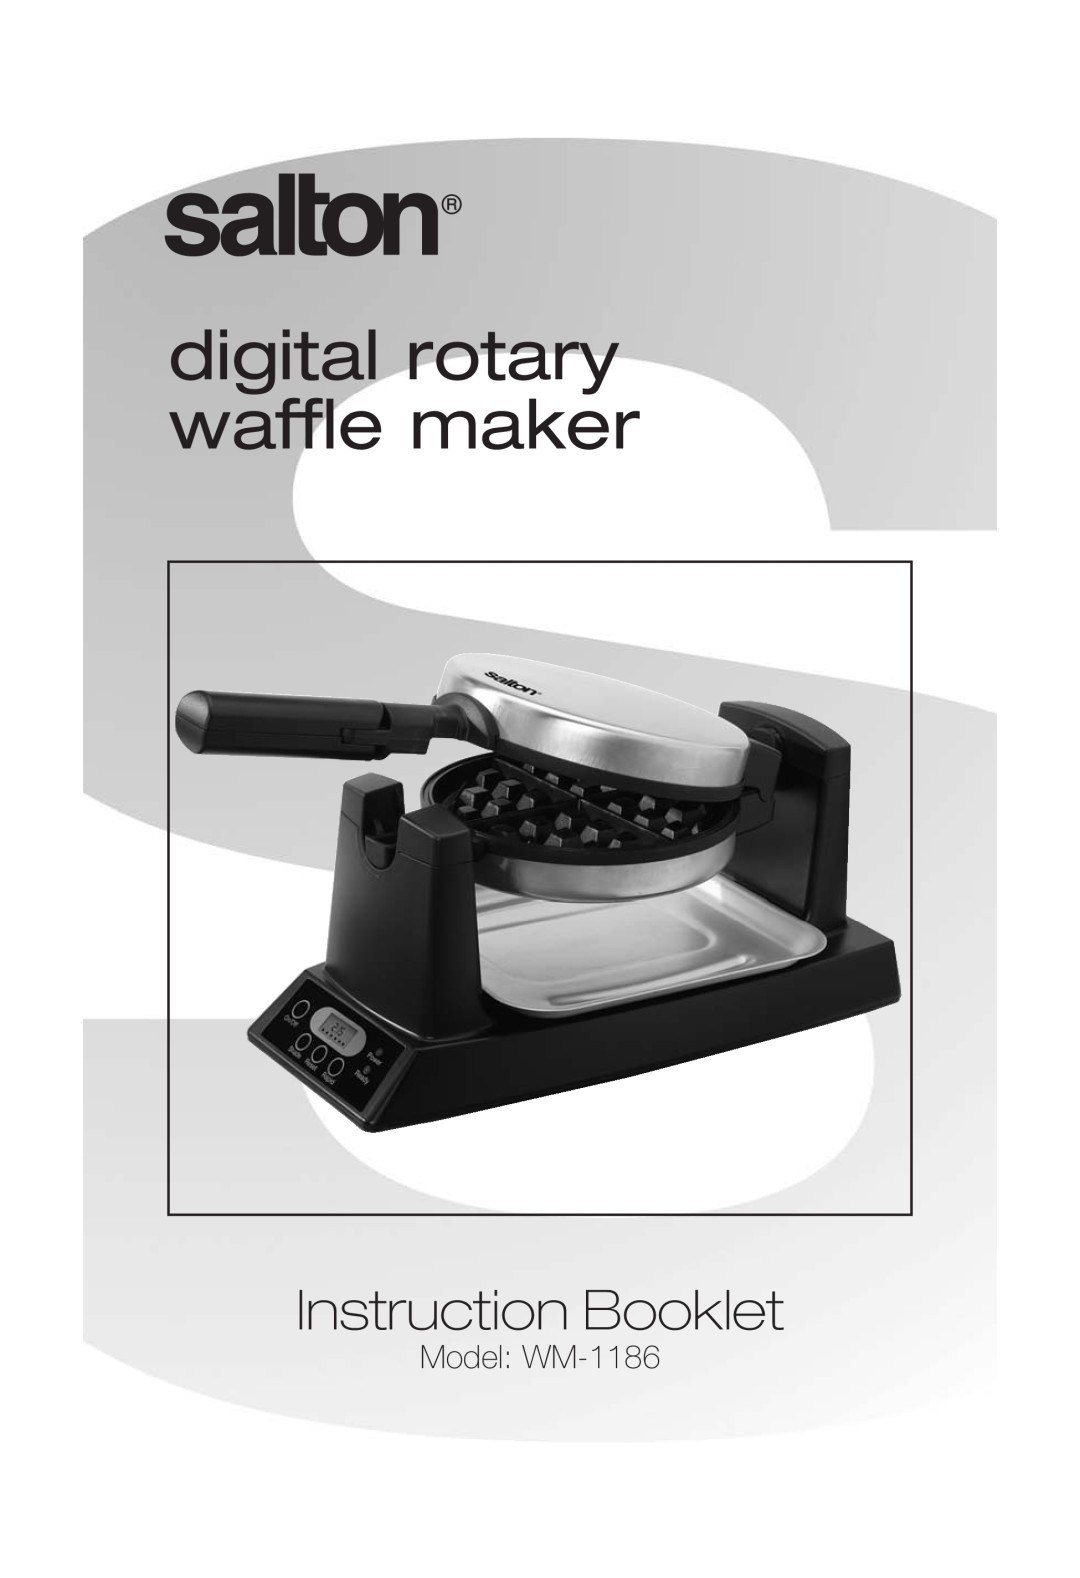 Salton manual digital rotary waffle maker, Instruction Booklet, Model WM-1186 